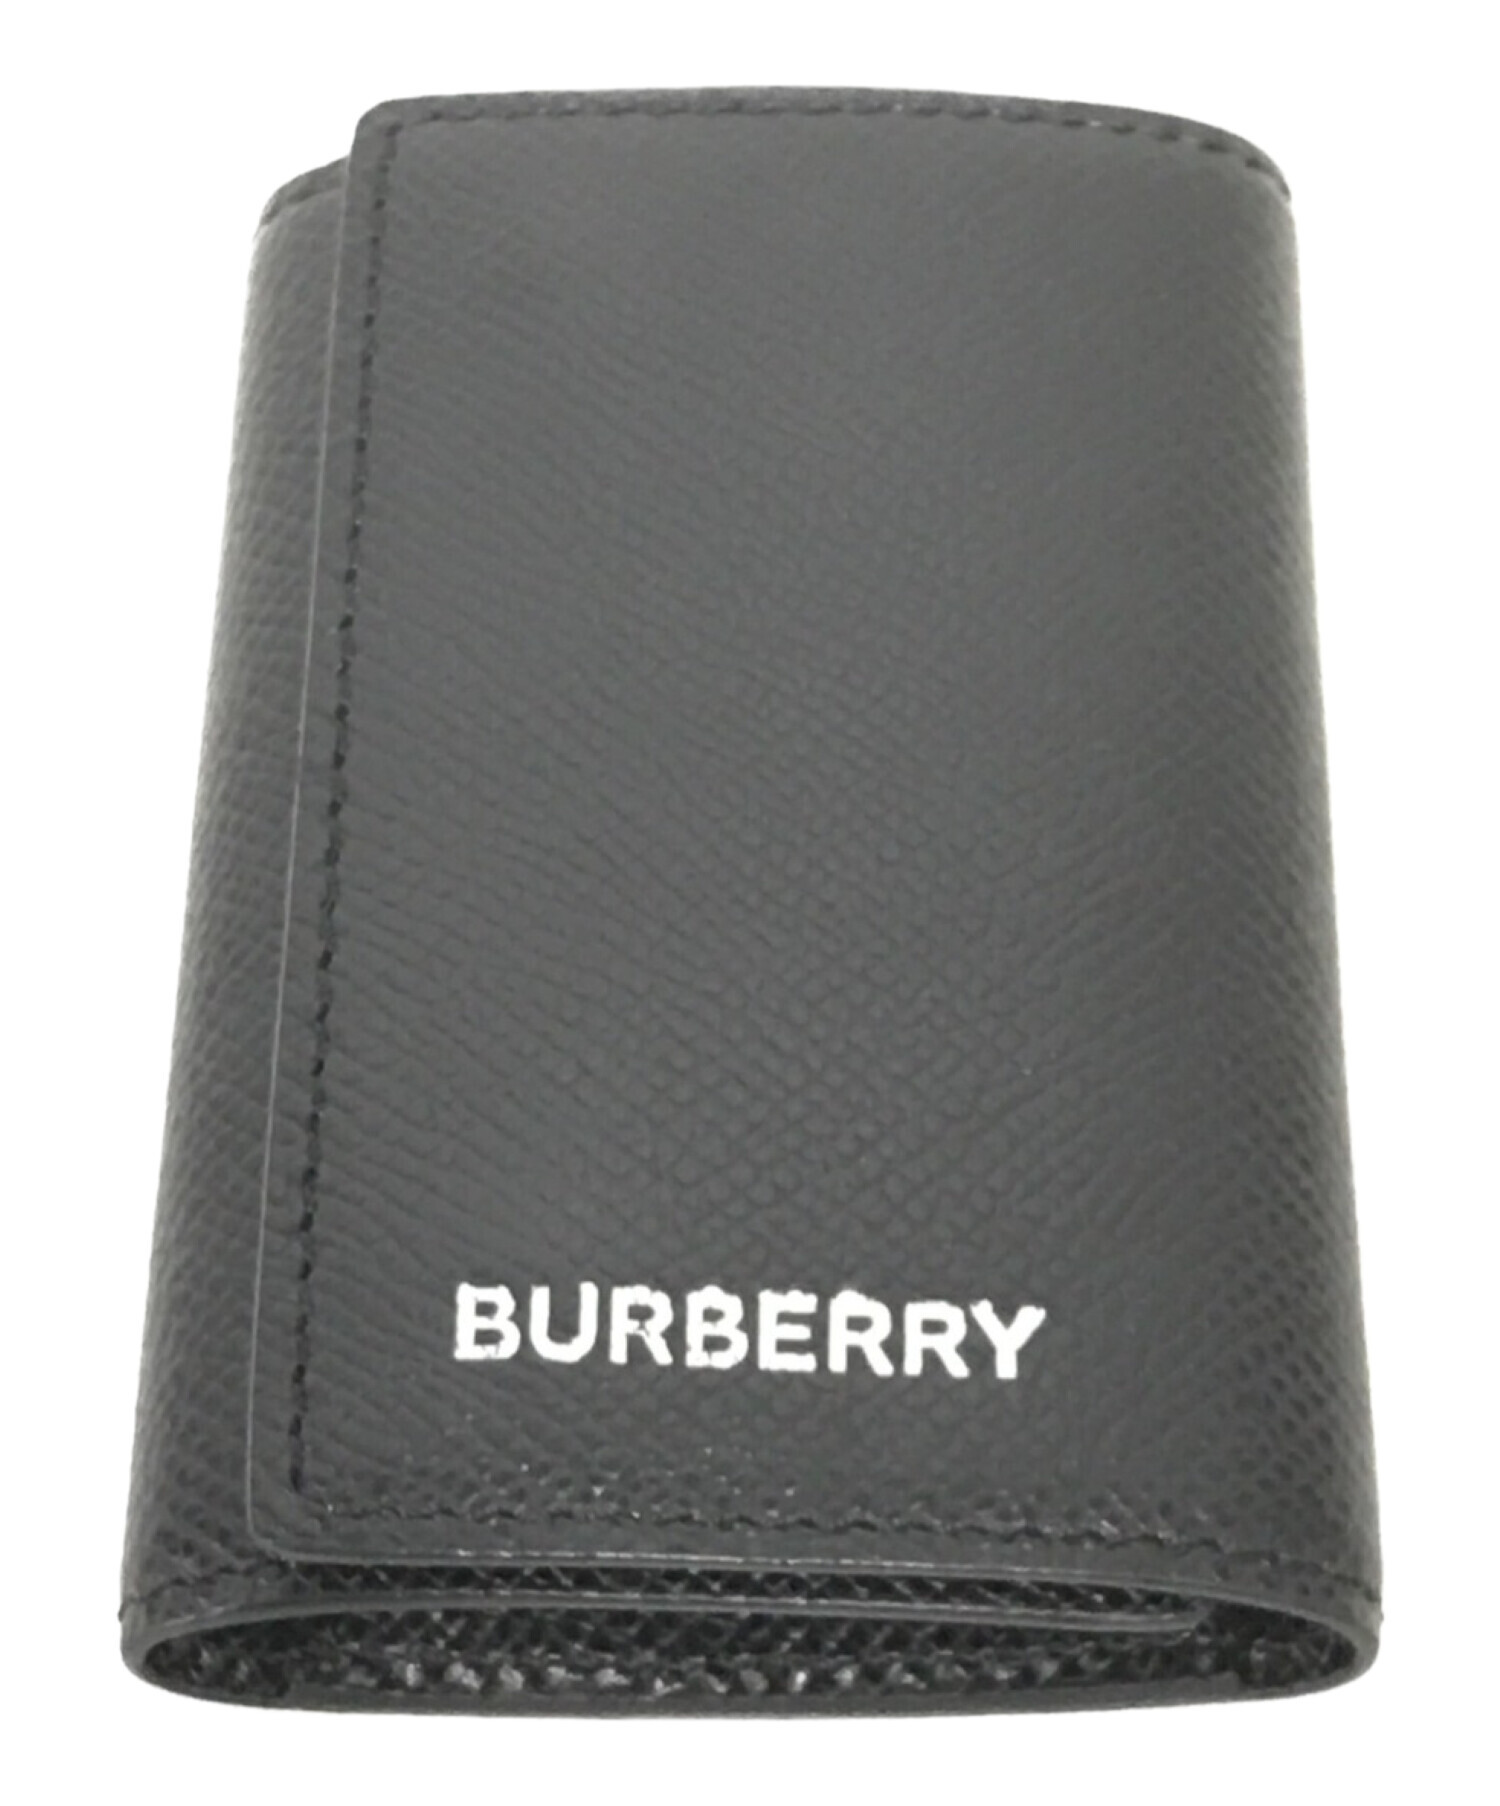 BURBERRY (バーバリー) ロゴ入りレザー6連キーケース ブラック